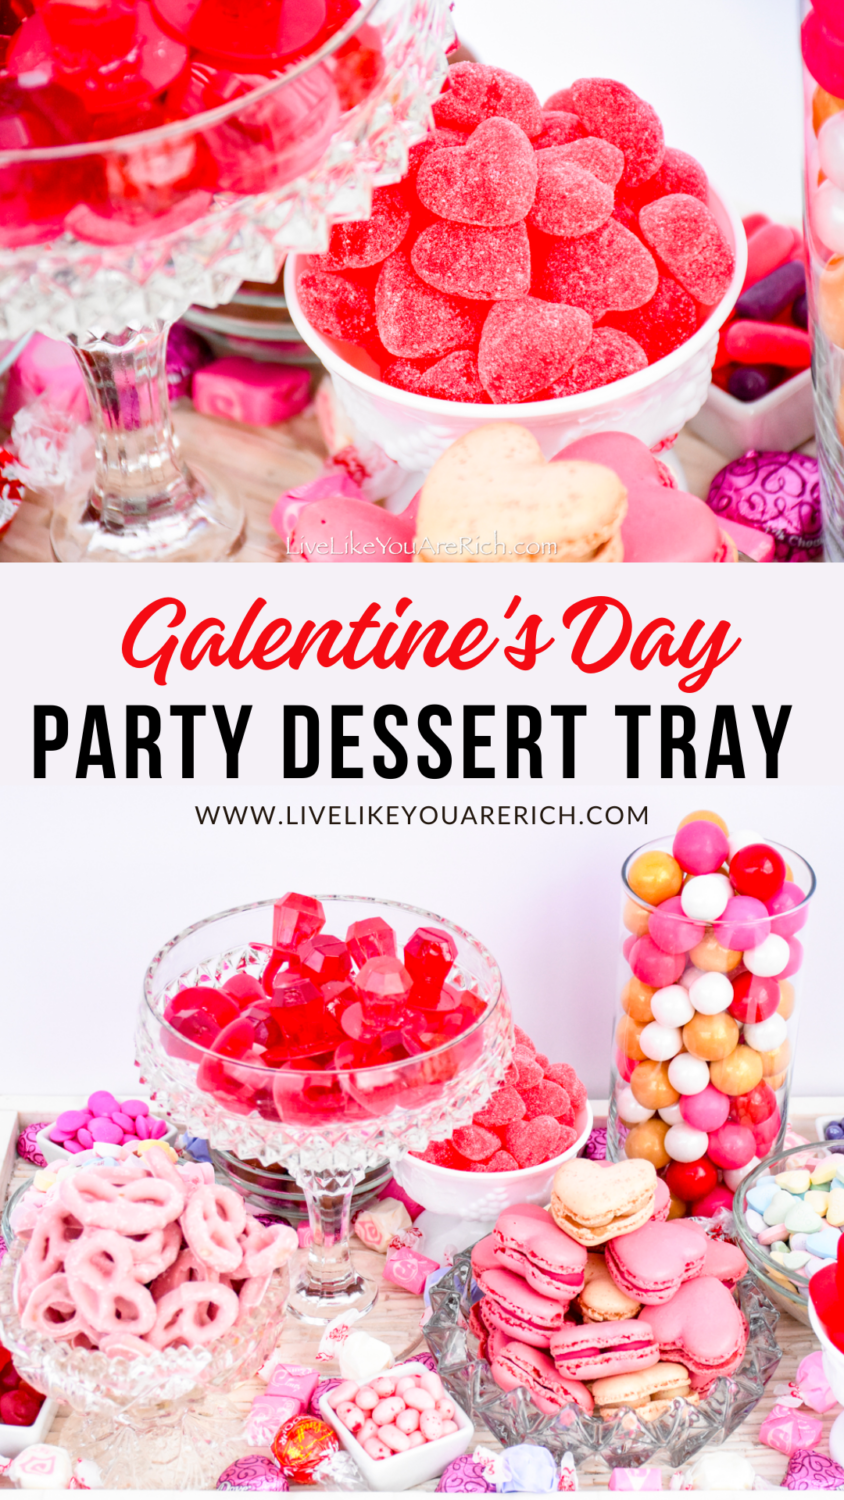 Galentine's Day Party Dessert Tray